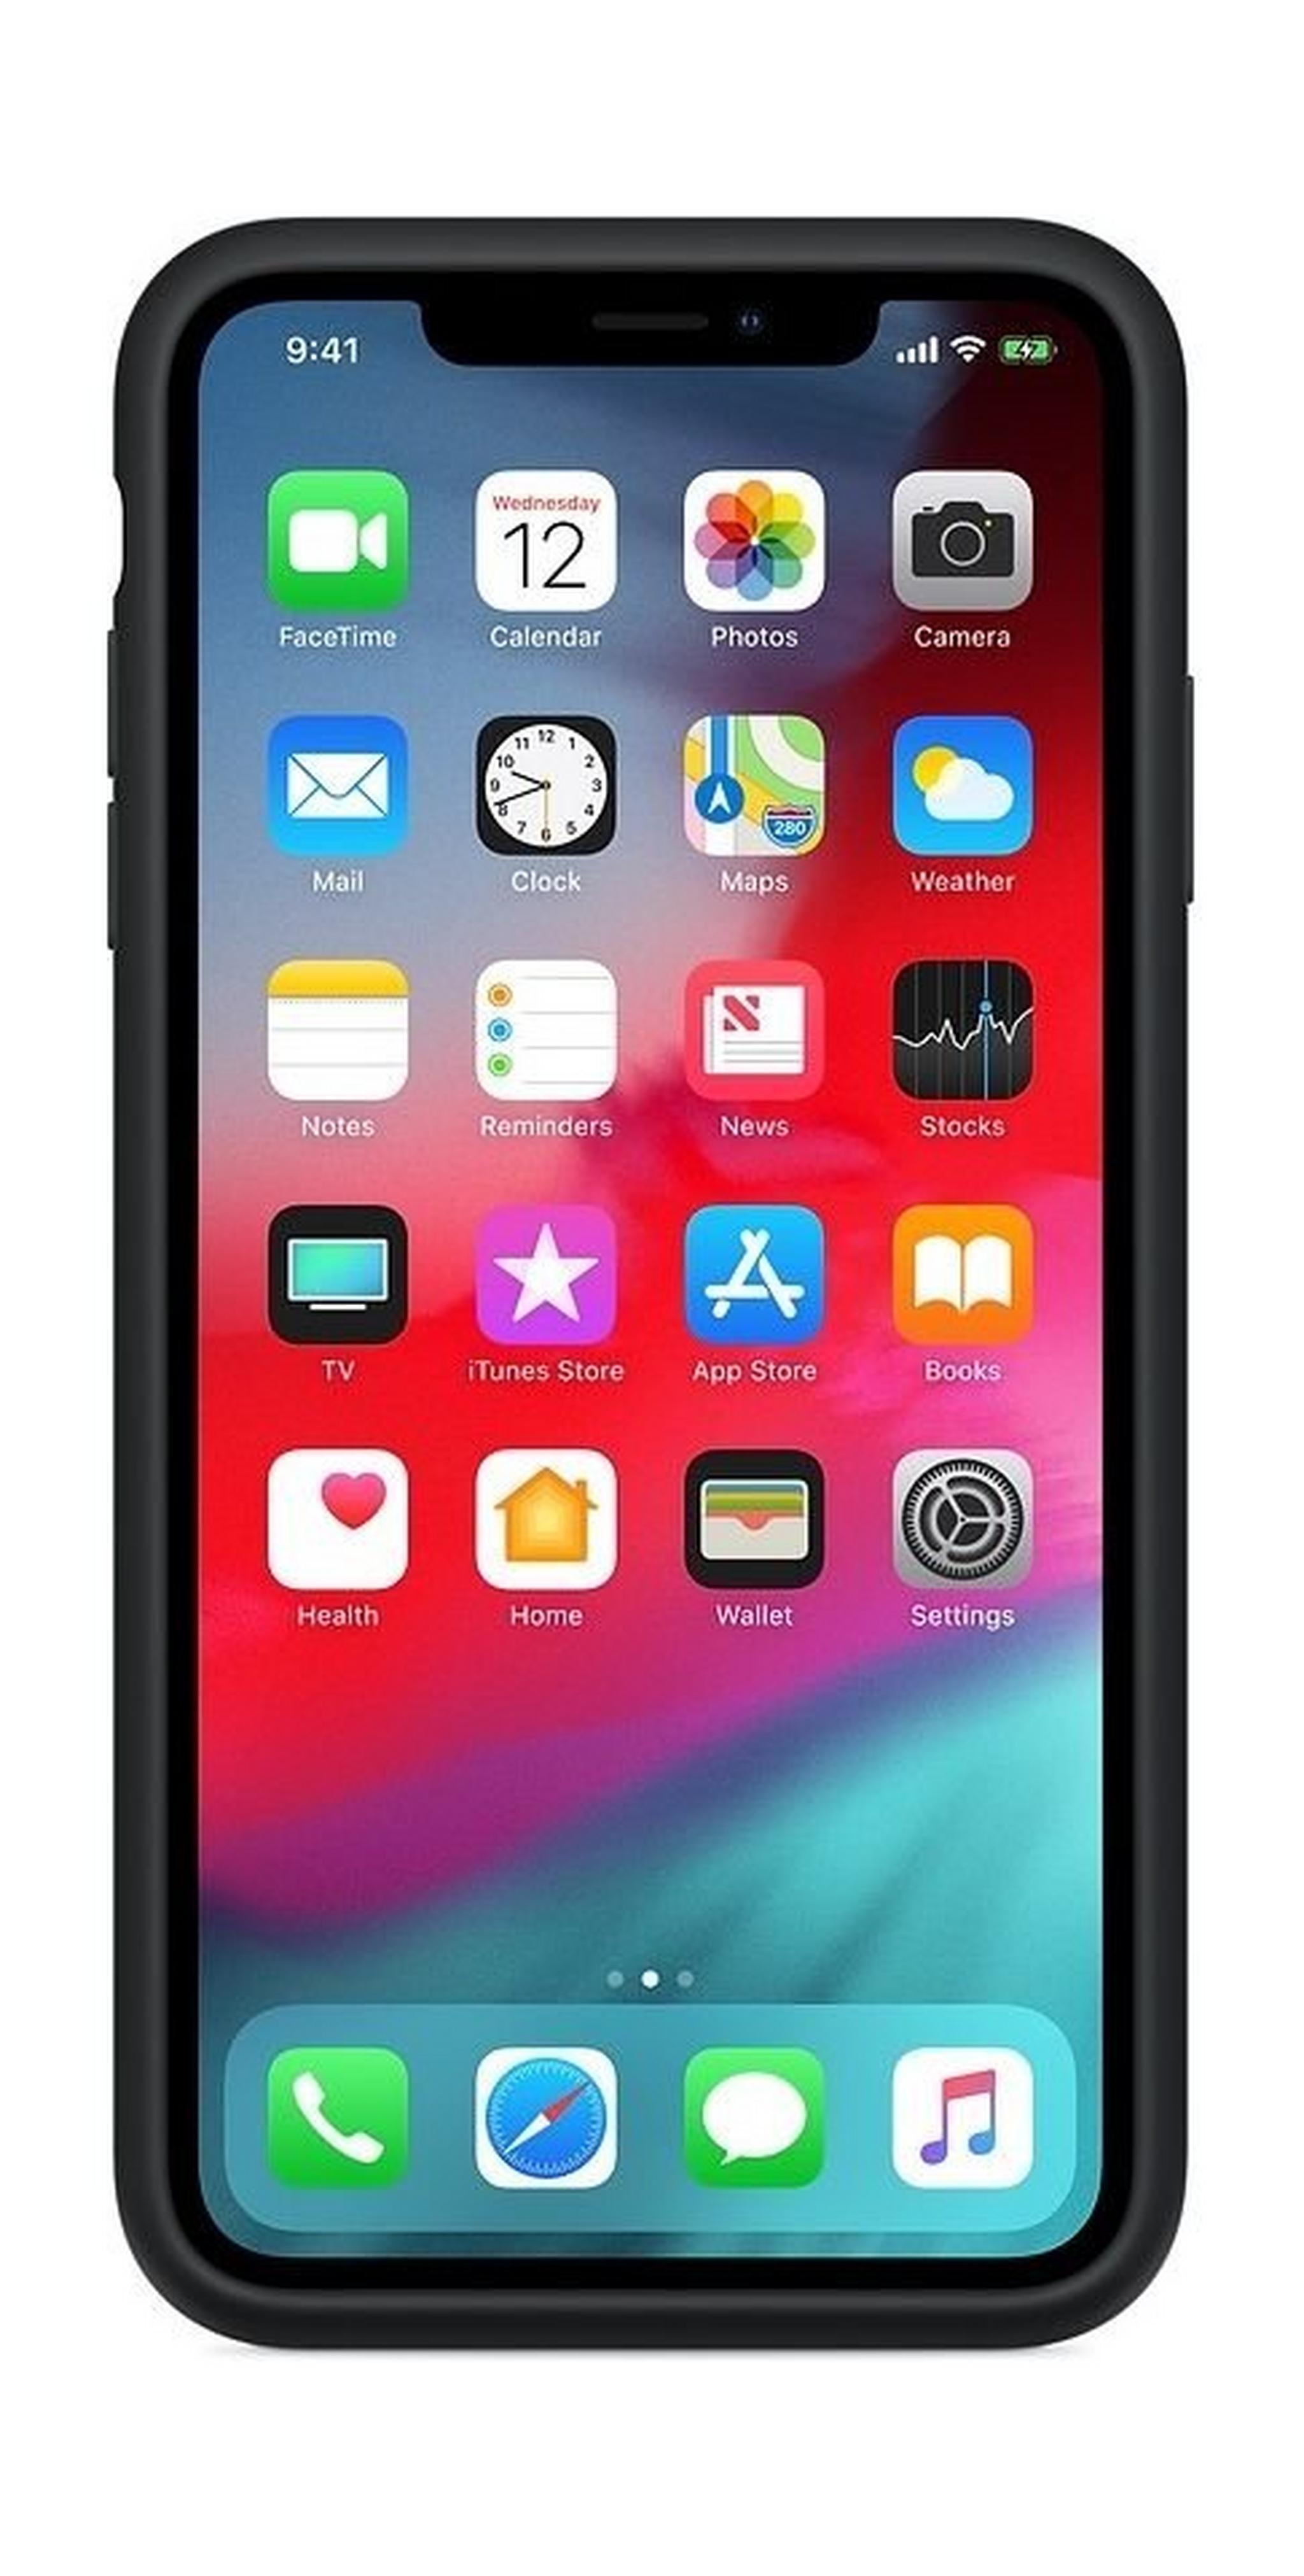 Apple iPhone XS MAX Smart Battery Case - Black